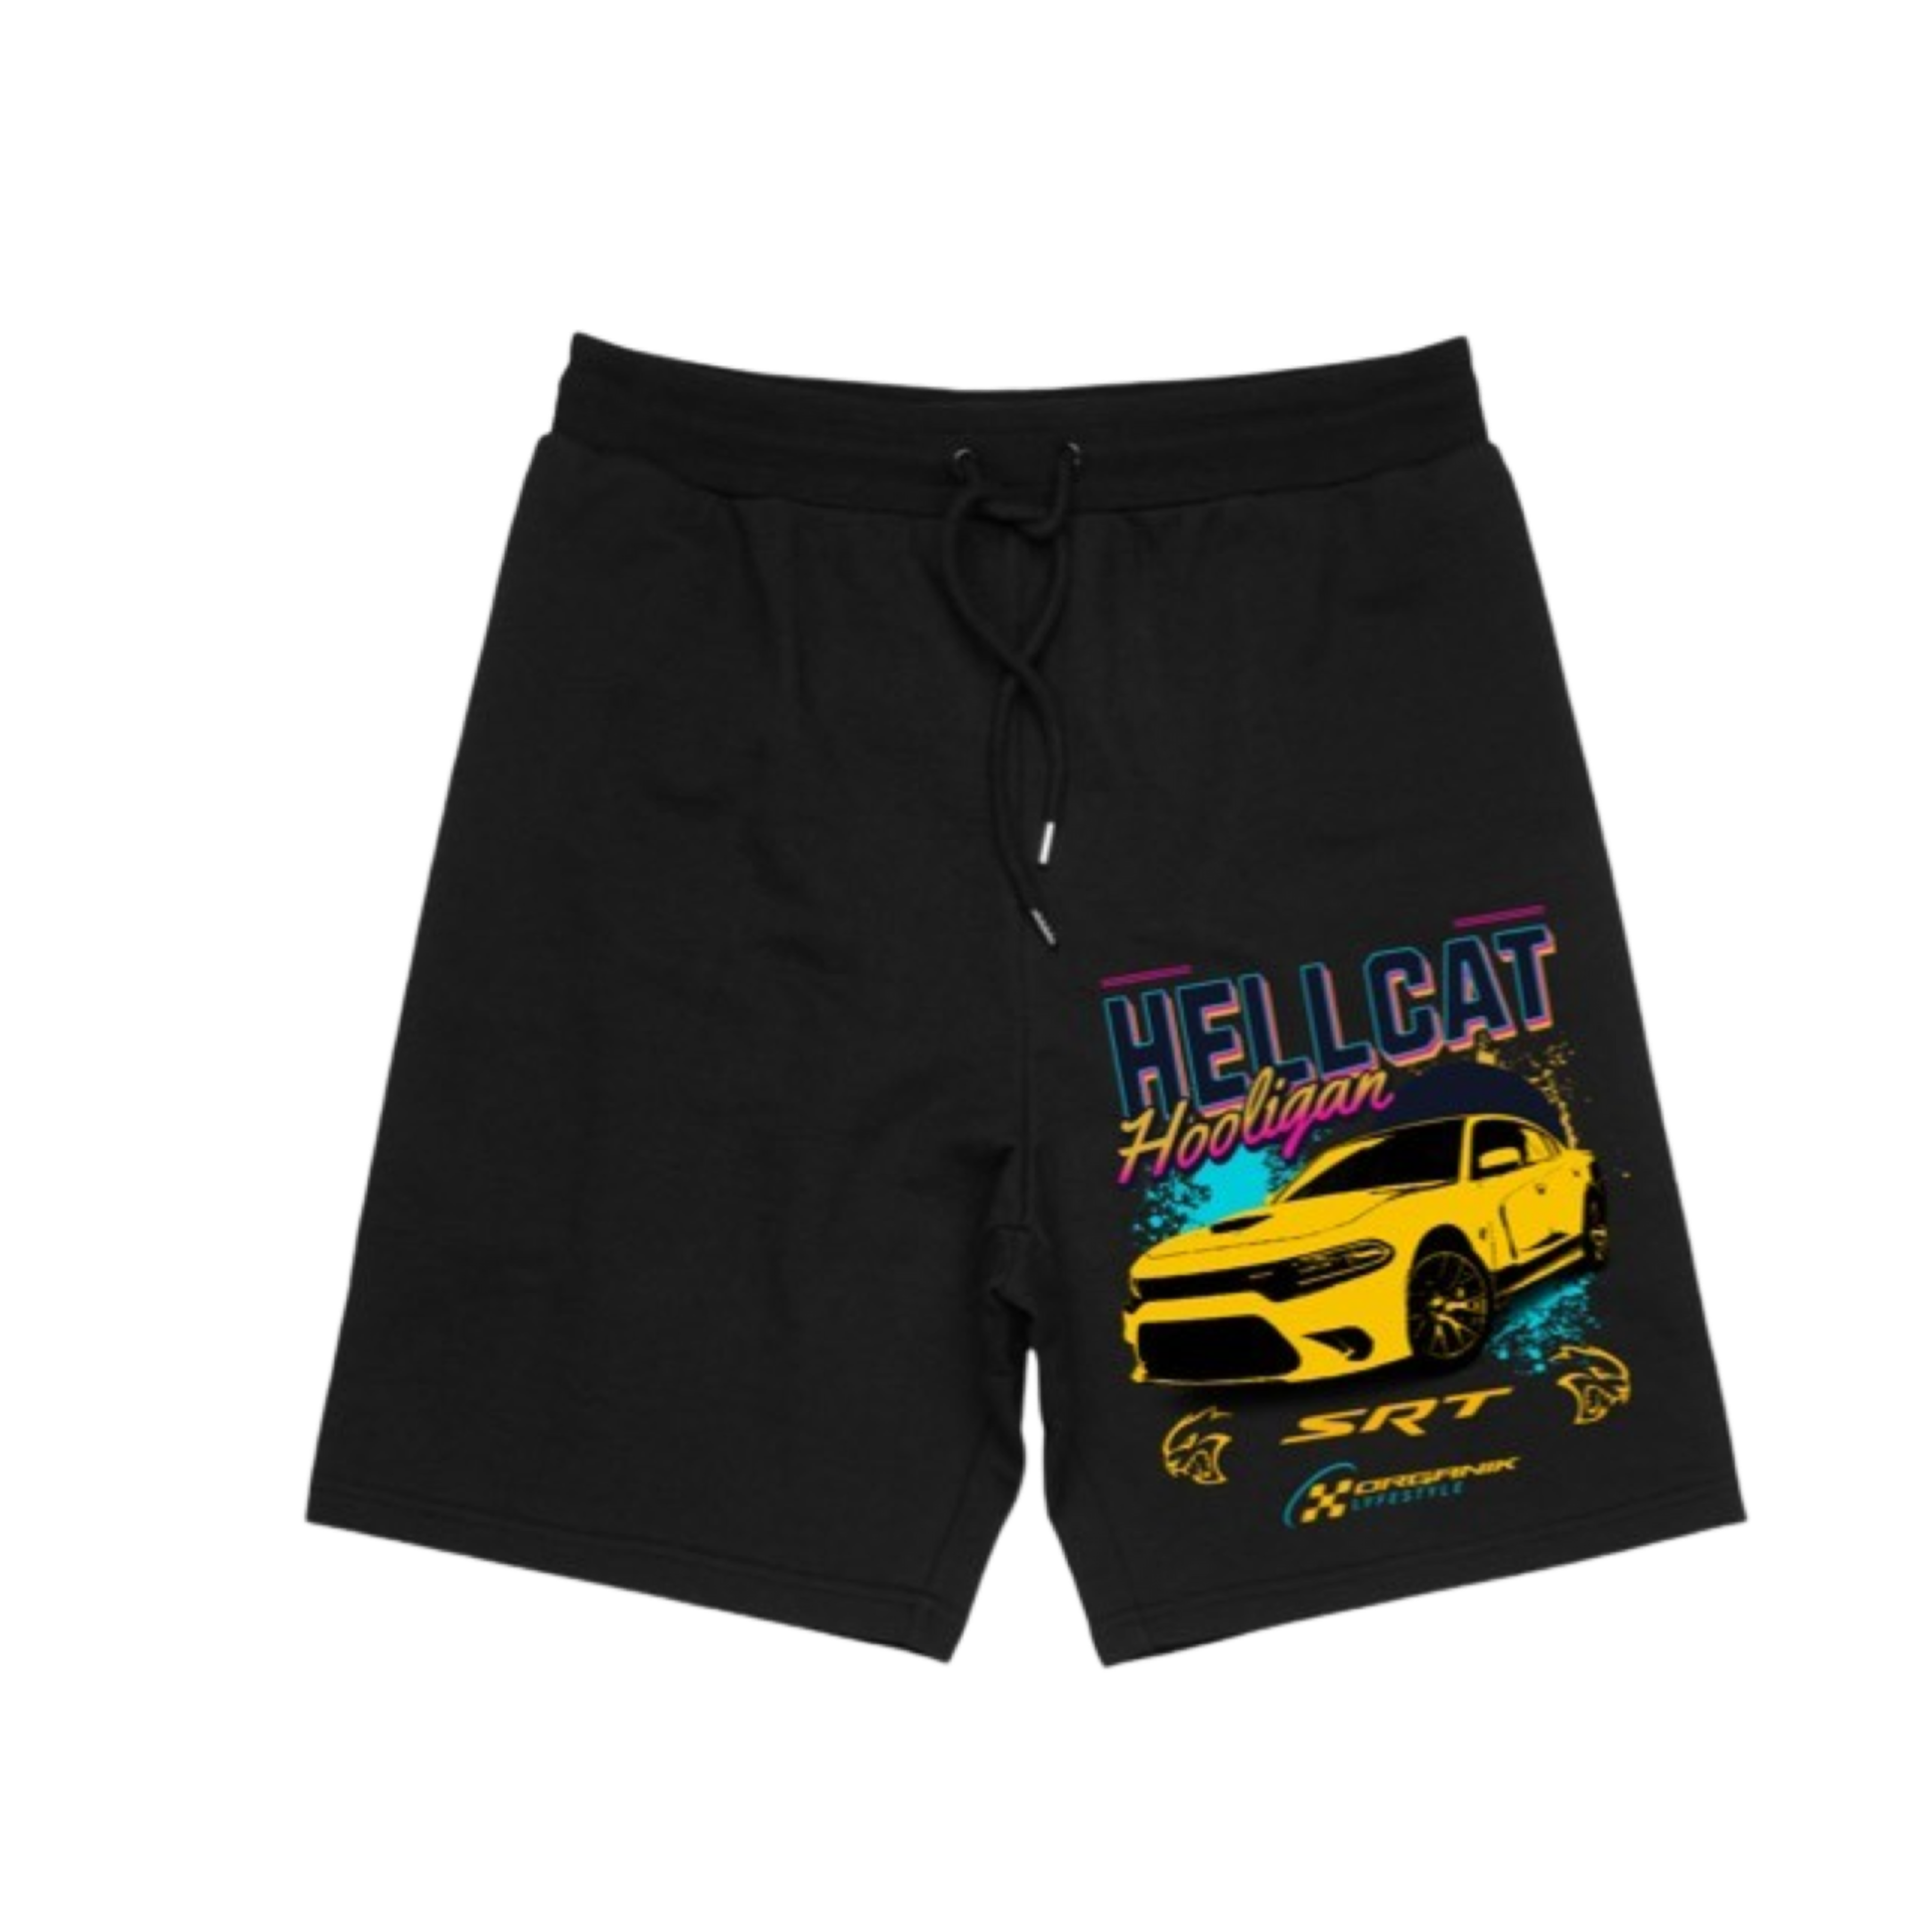 Organik Lyfestyle - Hellcat Hooligan Shorts - Black